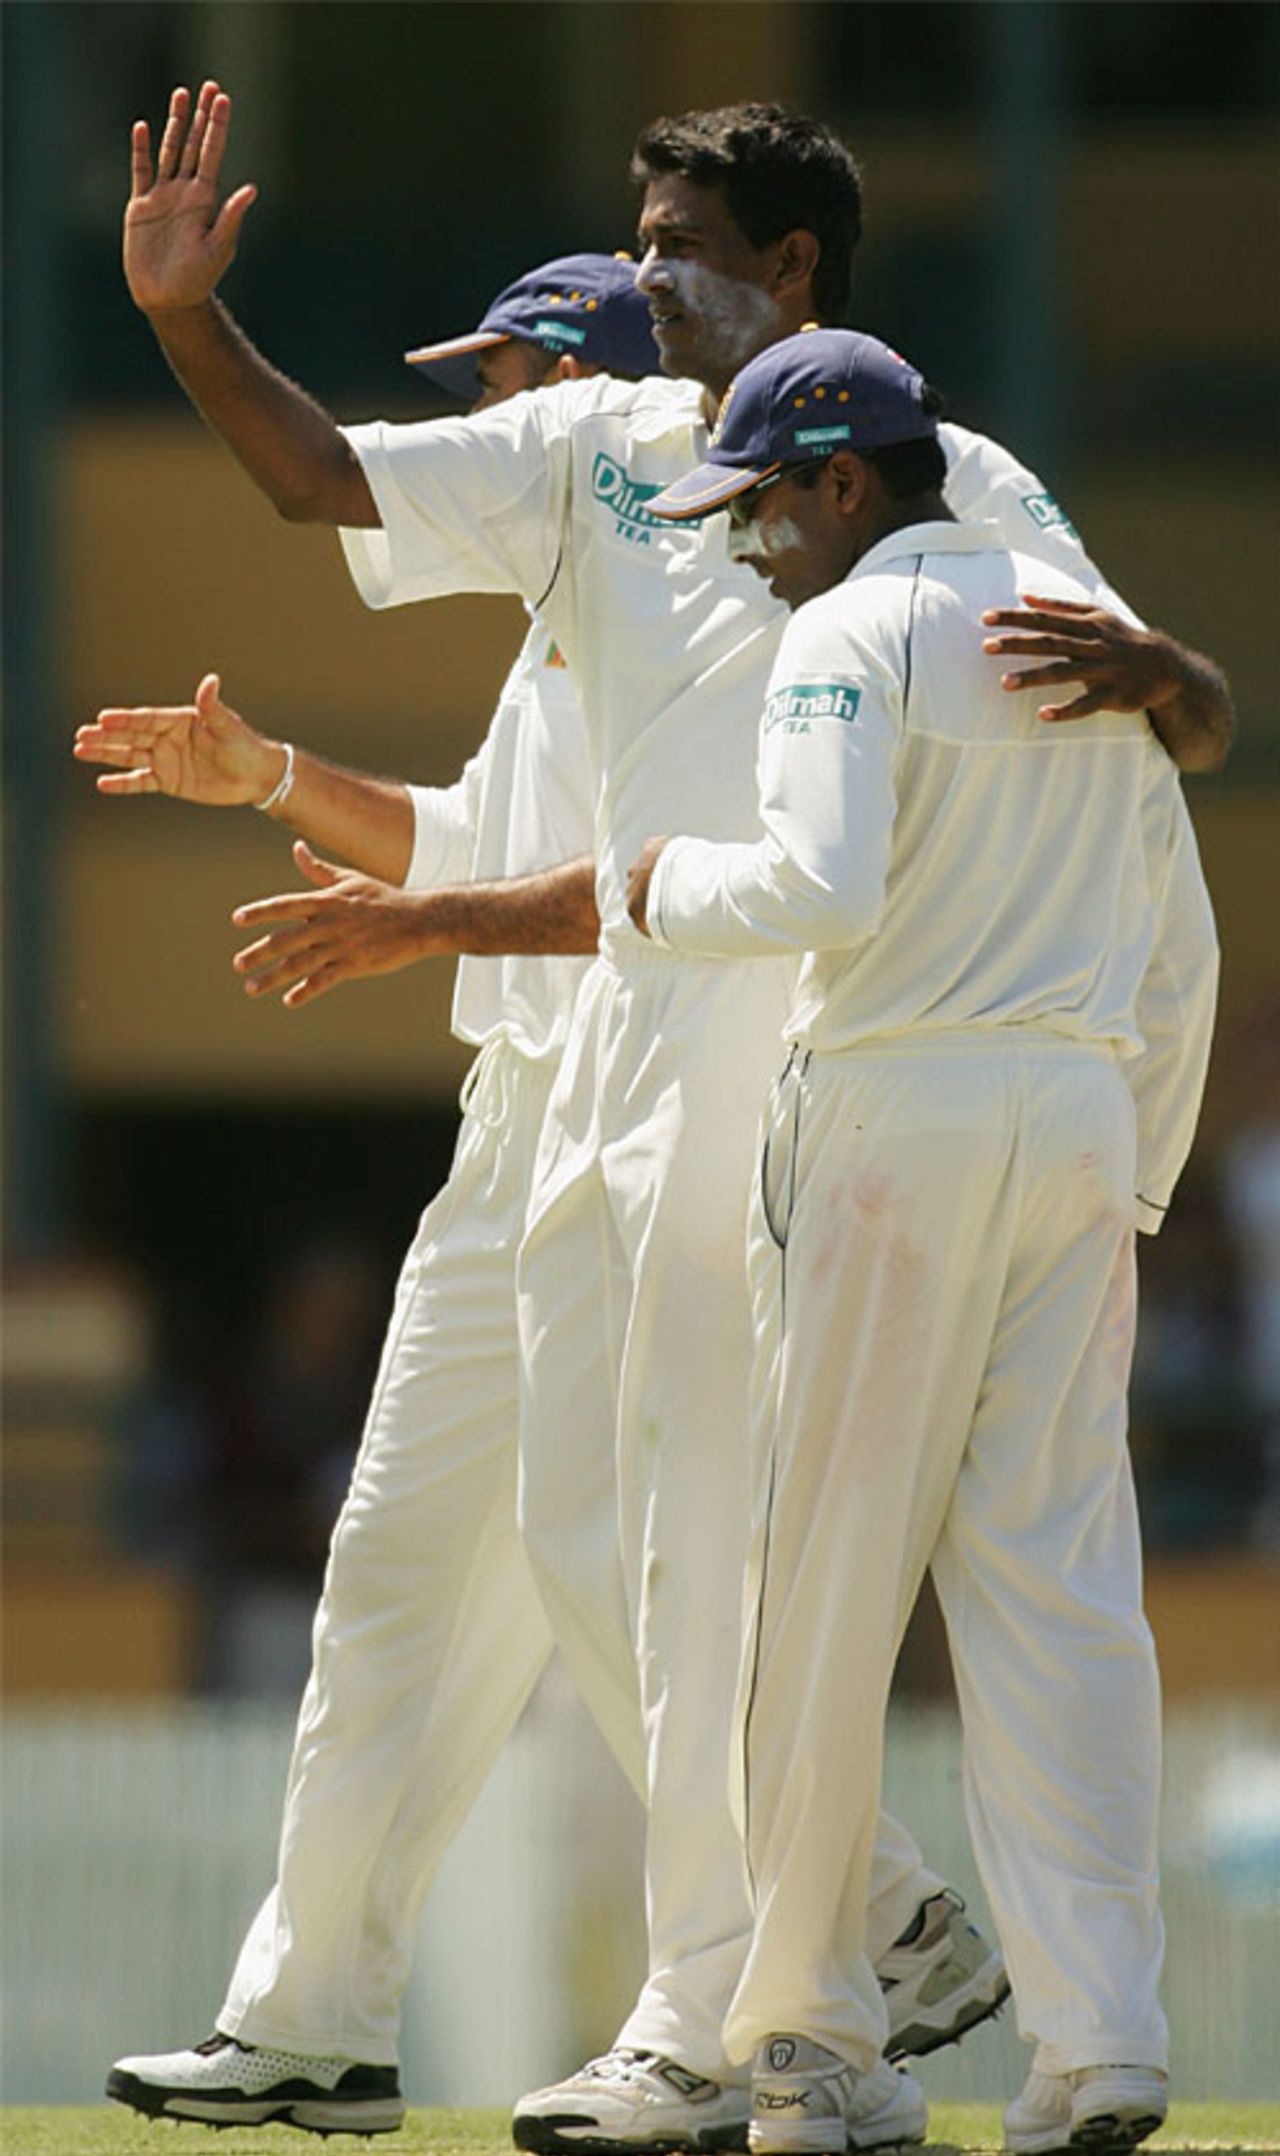 Farveez Maharoof took three wickets on a hard-working day in Brisbane, Queensland v Sri Lankans, 2nd day, Brisbane, November 3, 2007